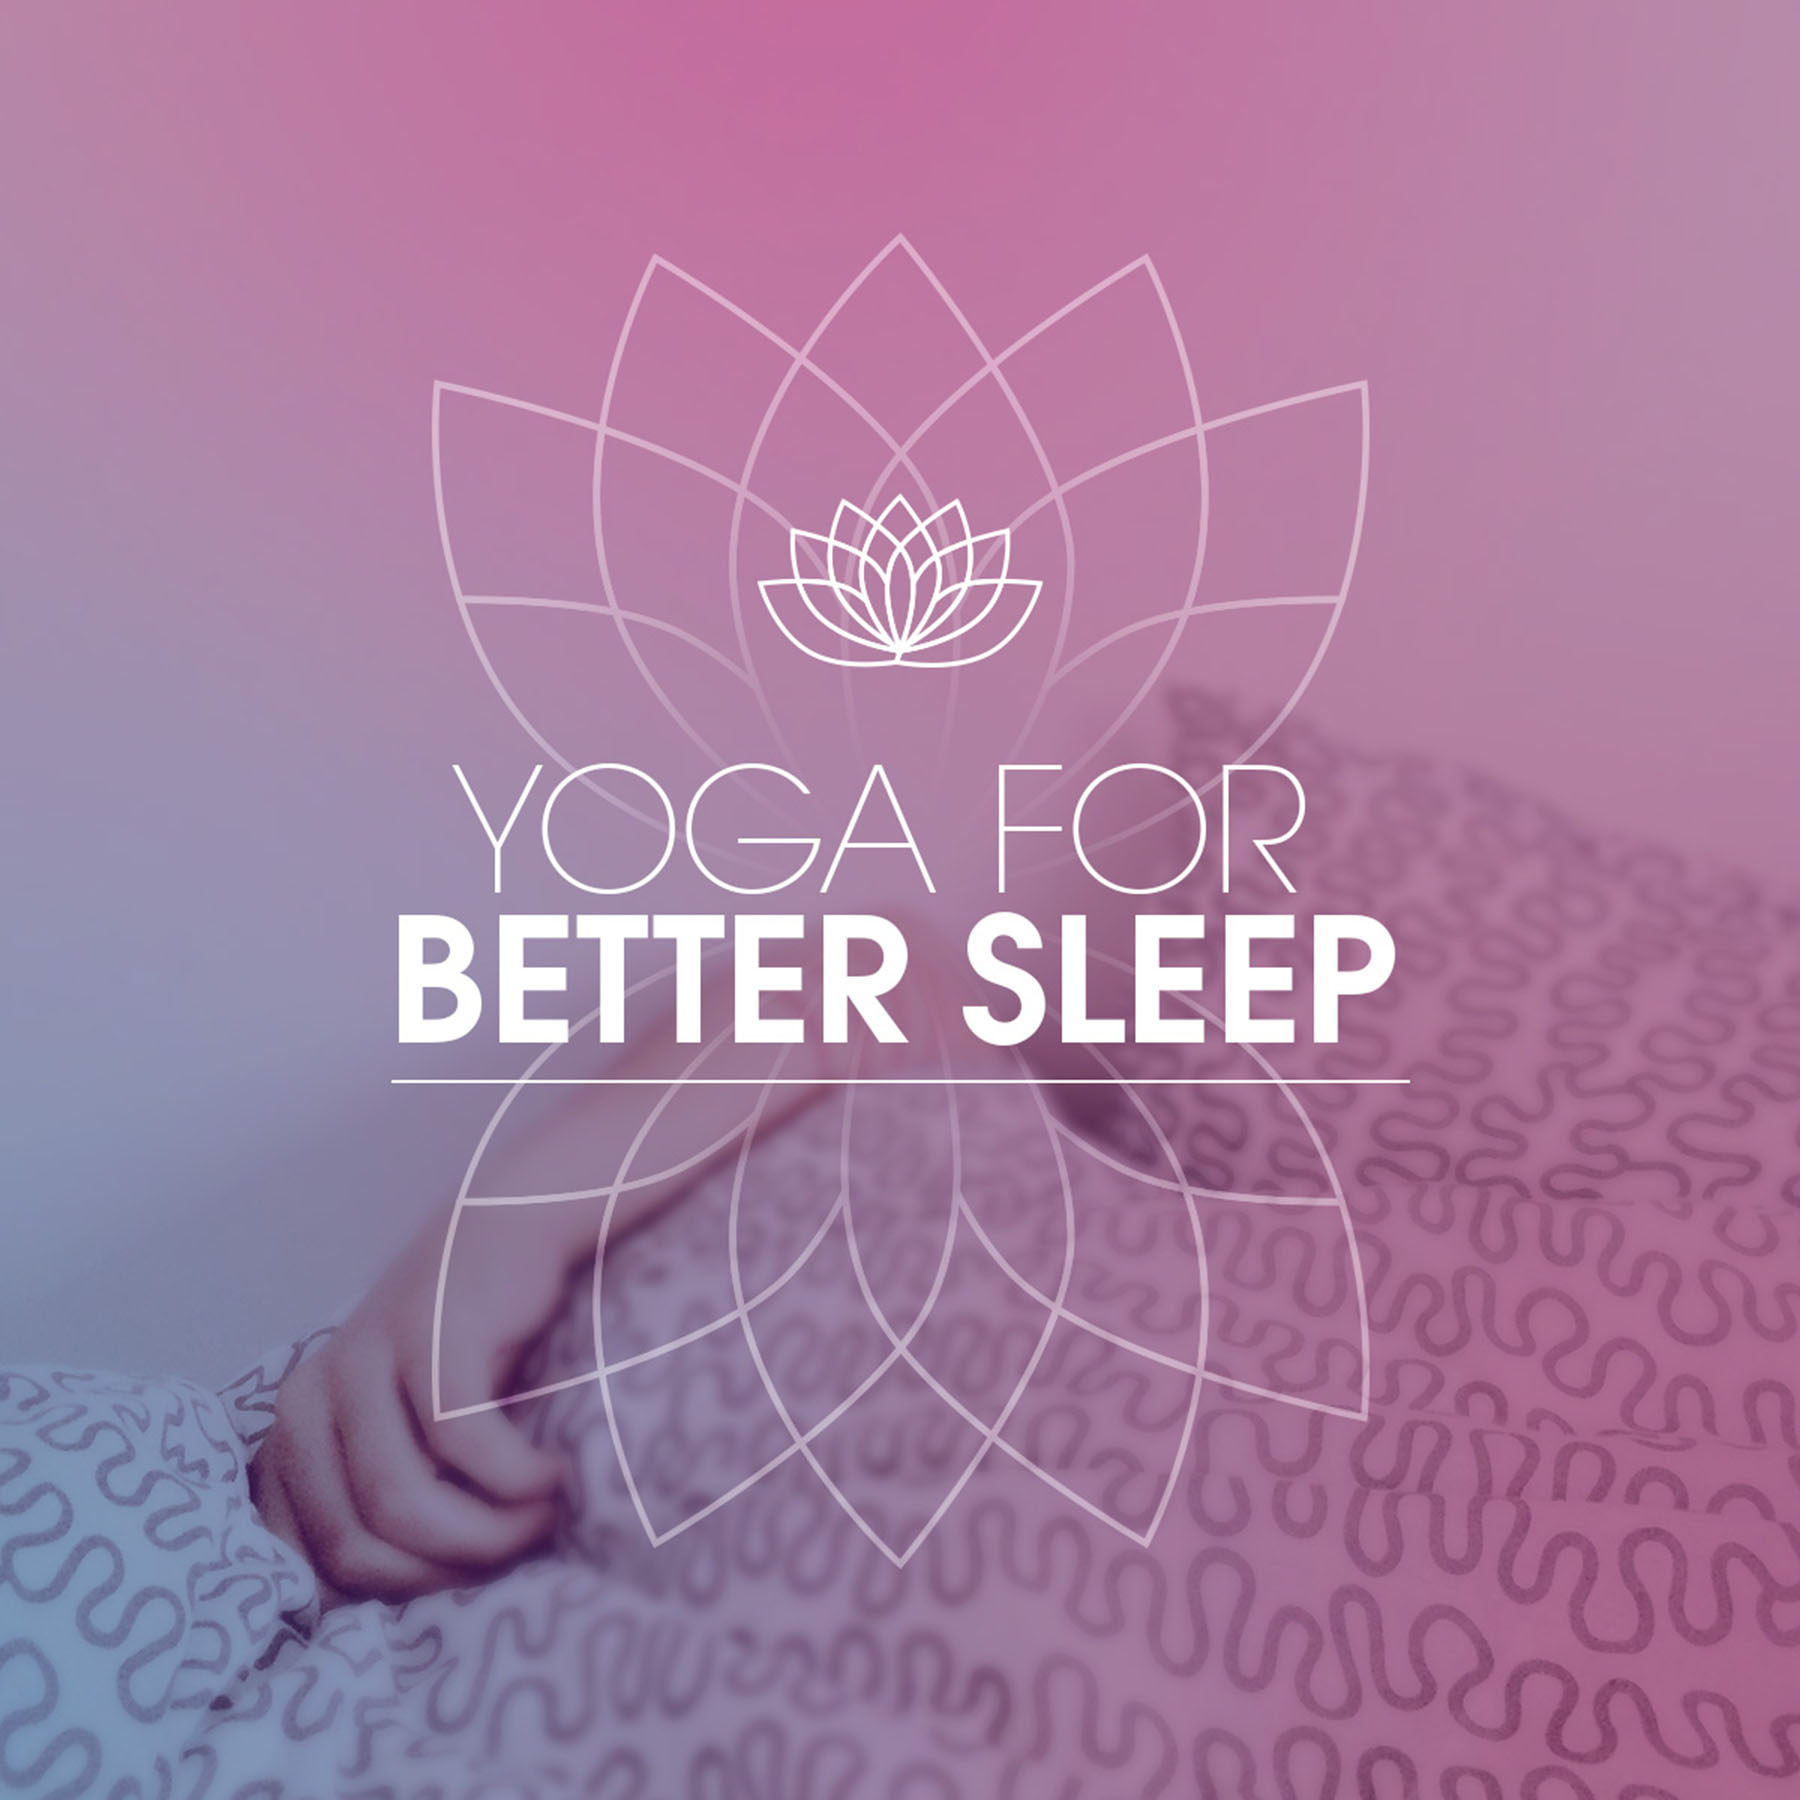 4 Ways to a Good Night's Sleep: Yoga for Better Sleep